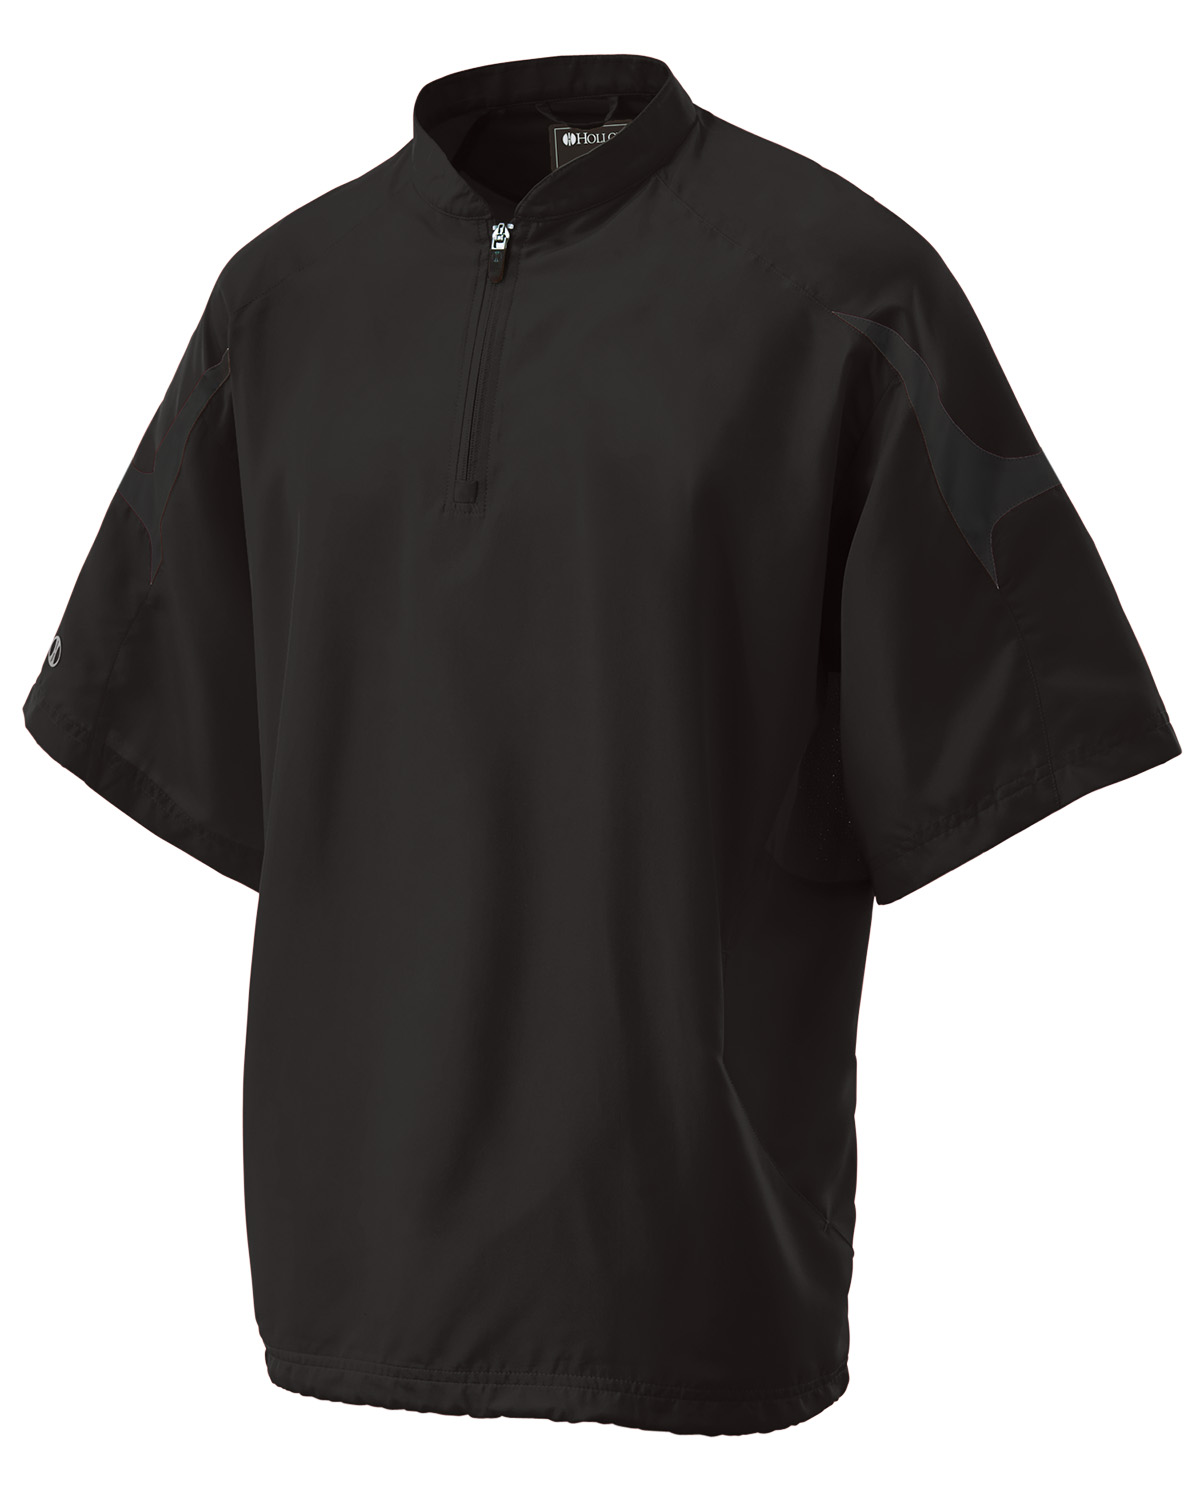 Holloway 222485 - Adult Polyester Short Sleeve Equalizer Jacket